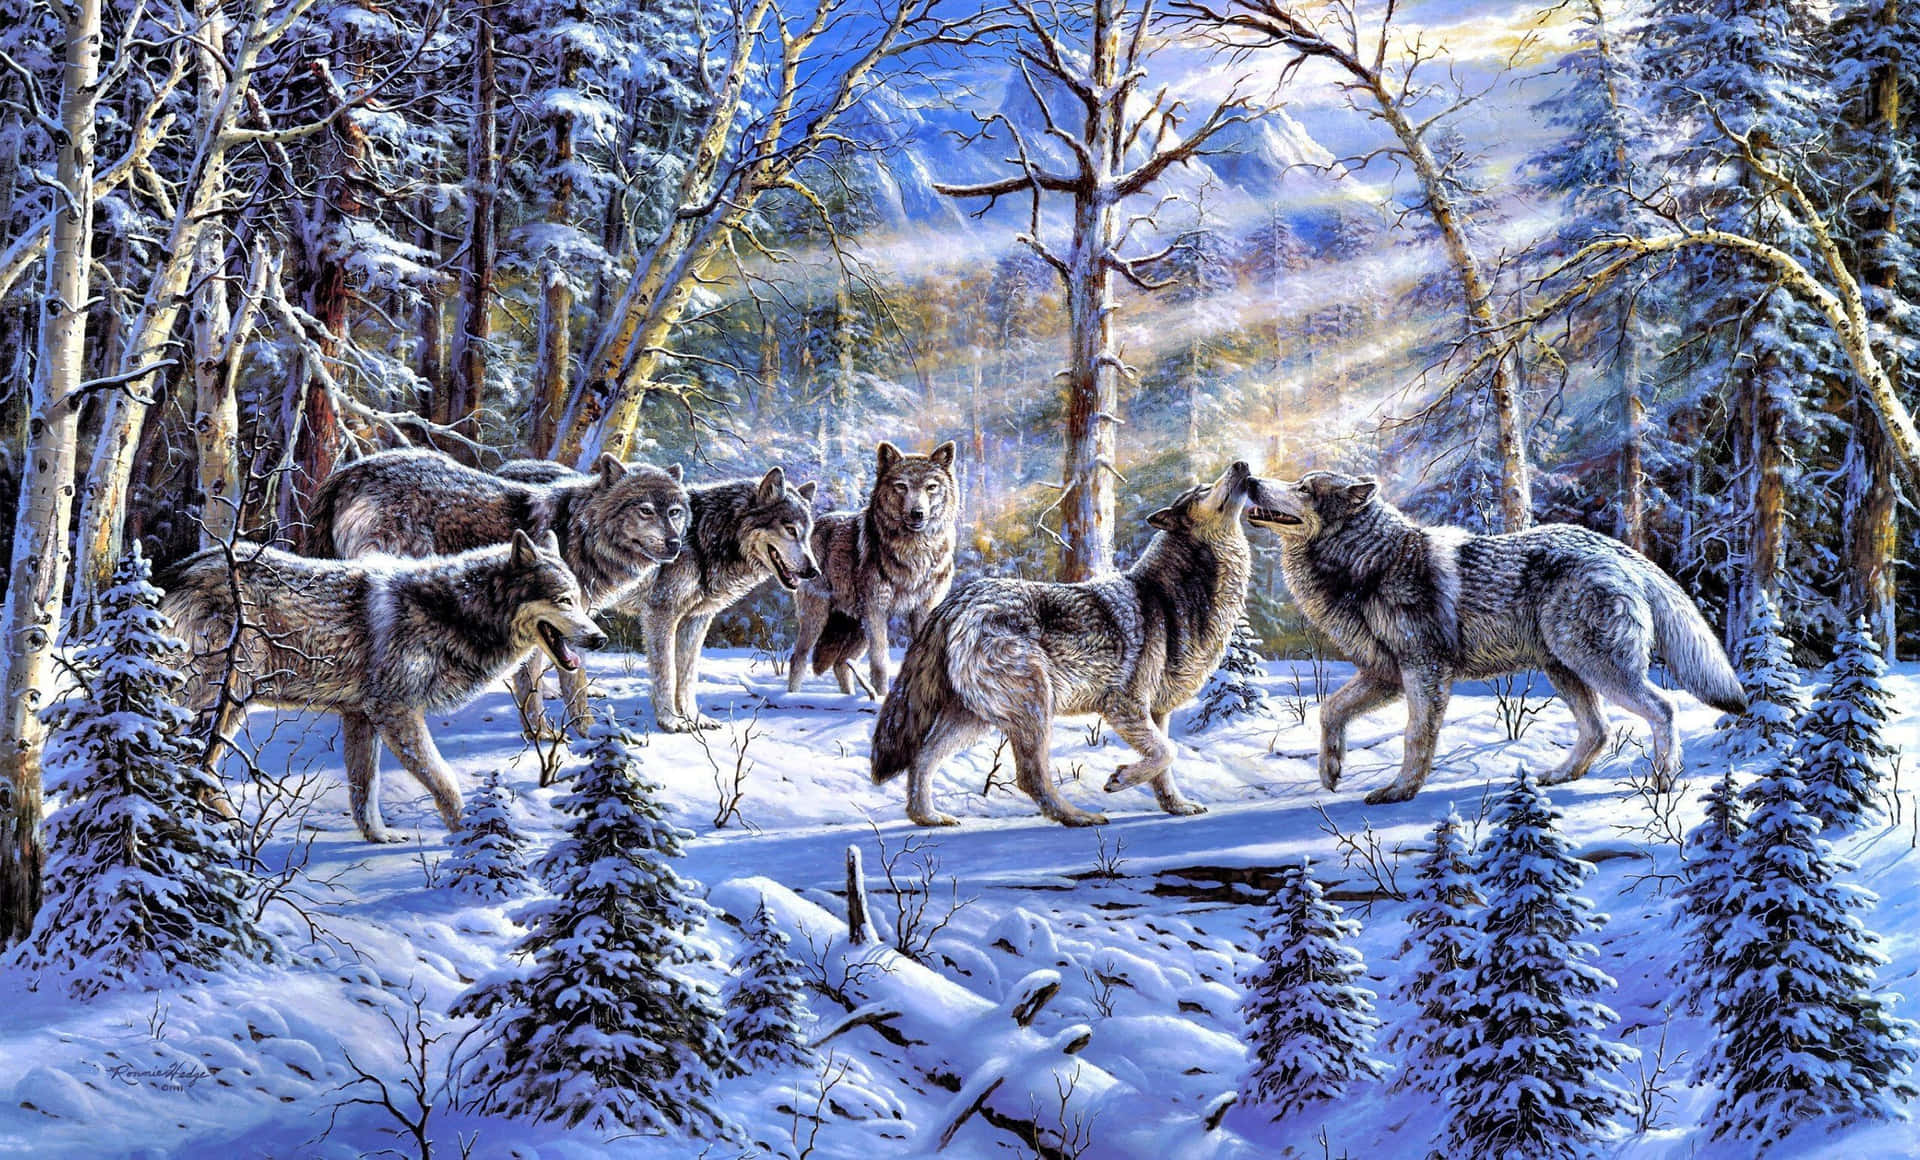 Enchanting Winter Landscape Painting Wallpaper